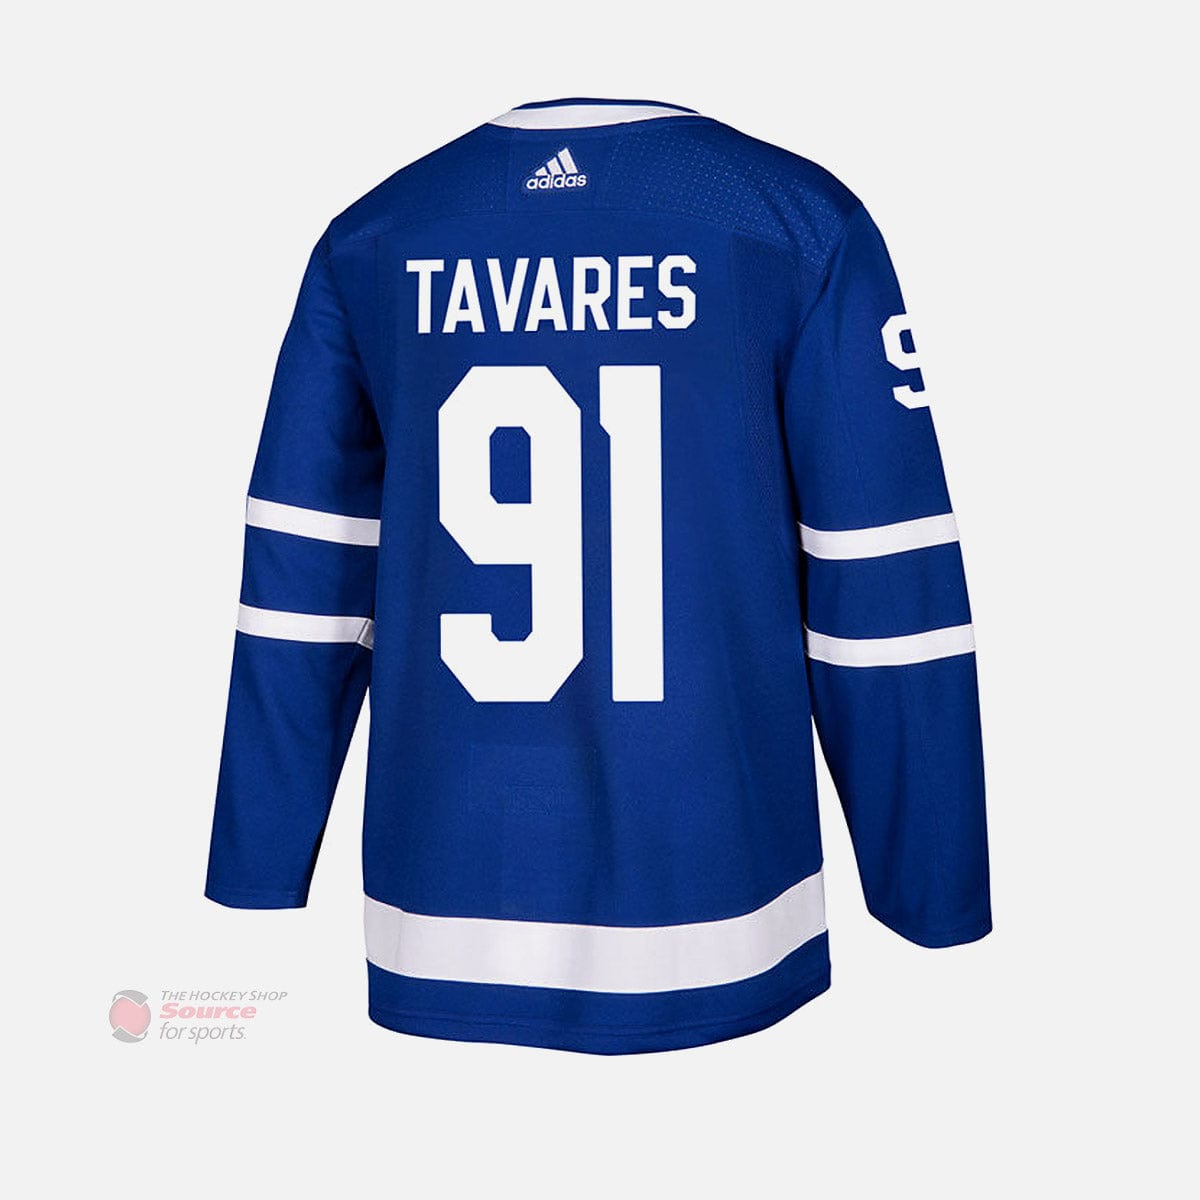 Toronto Maple Leafs Home Adidas Authentic Senior Jersey - John Tavares